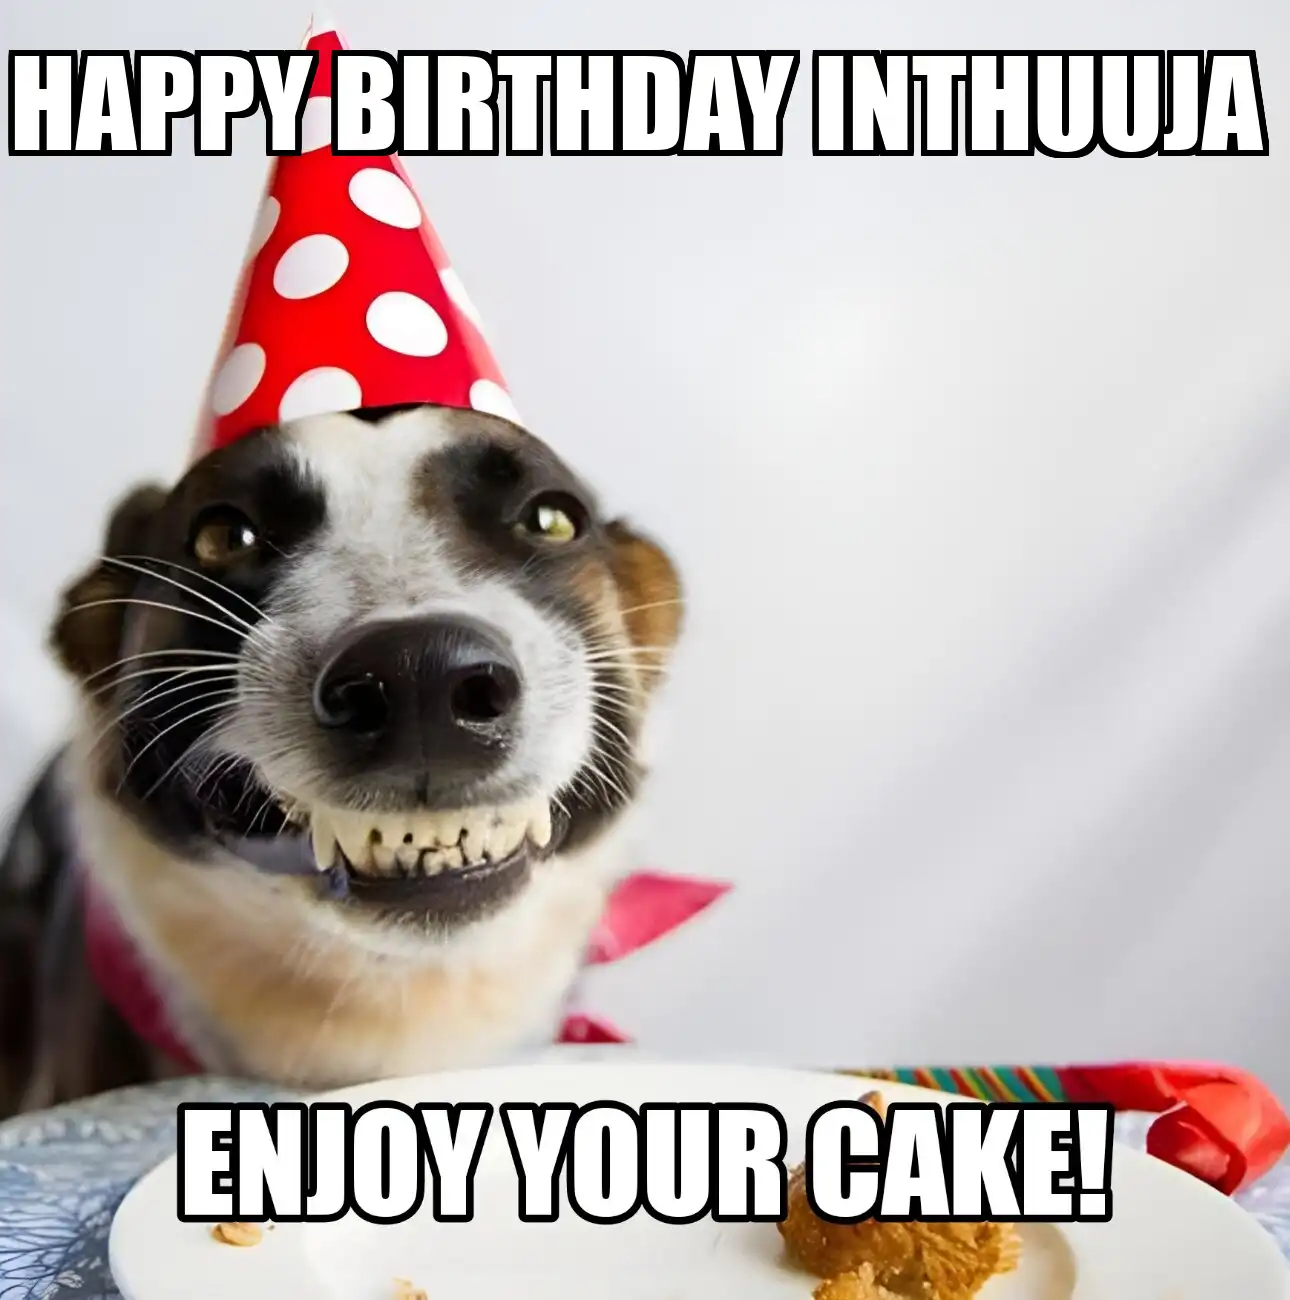 Happy Birthday Inthuuja Enjoy Your Cake Dog Meme